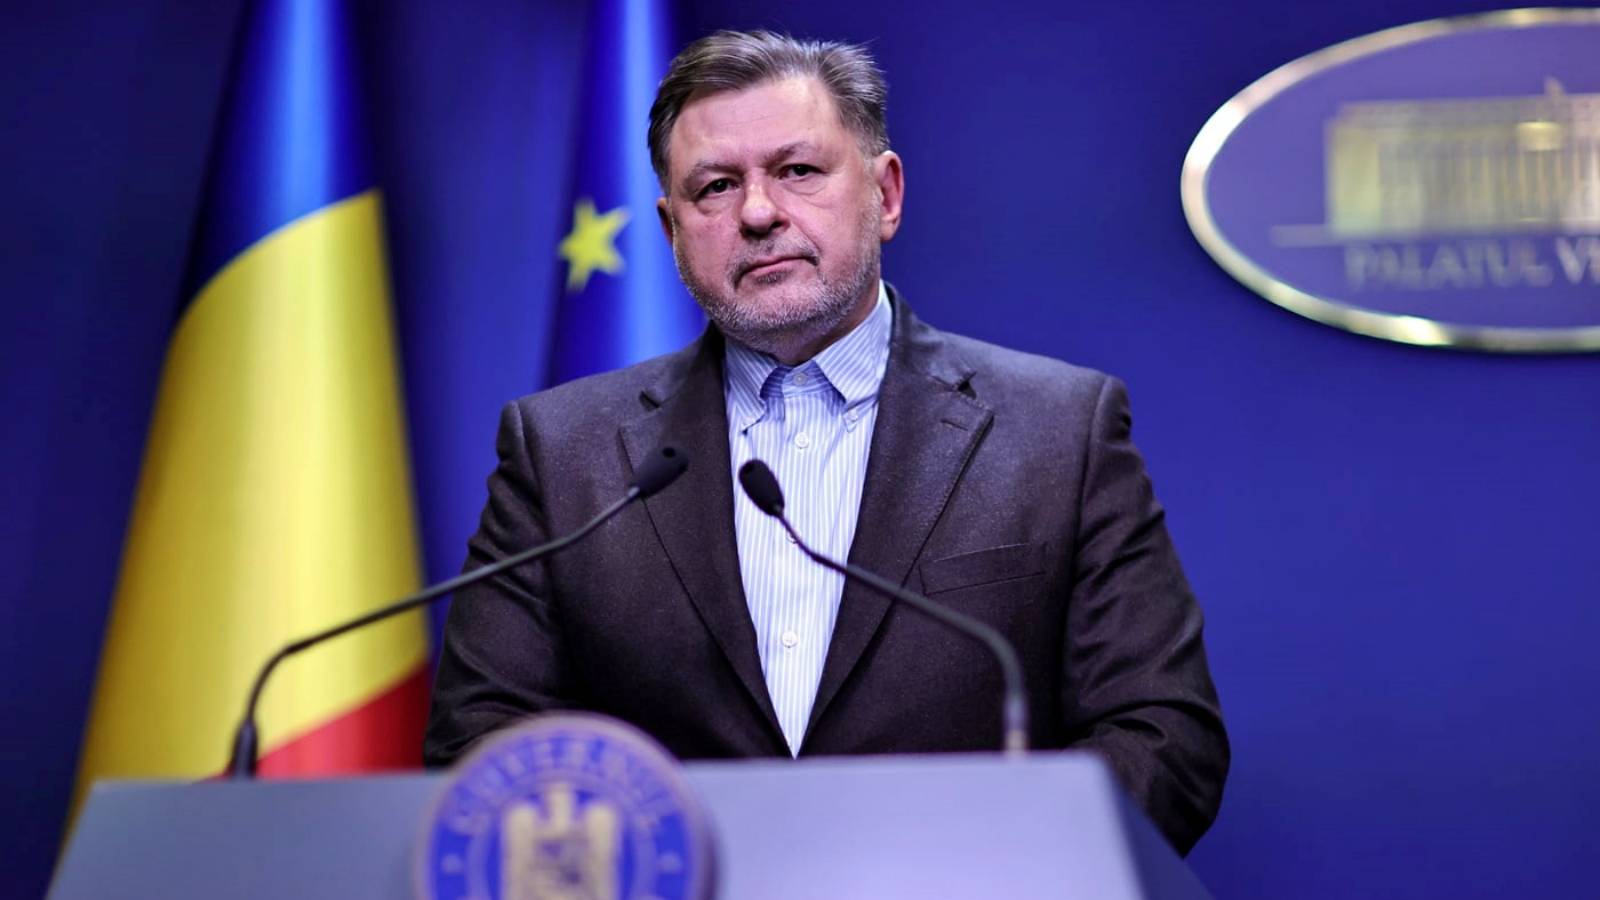 Meddelelser fra sundhedsministeren i LAST MINUTE Beslutninger truffet Alle rumænere